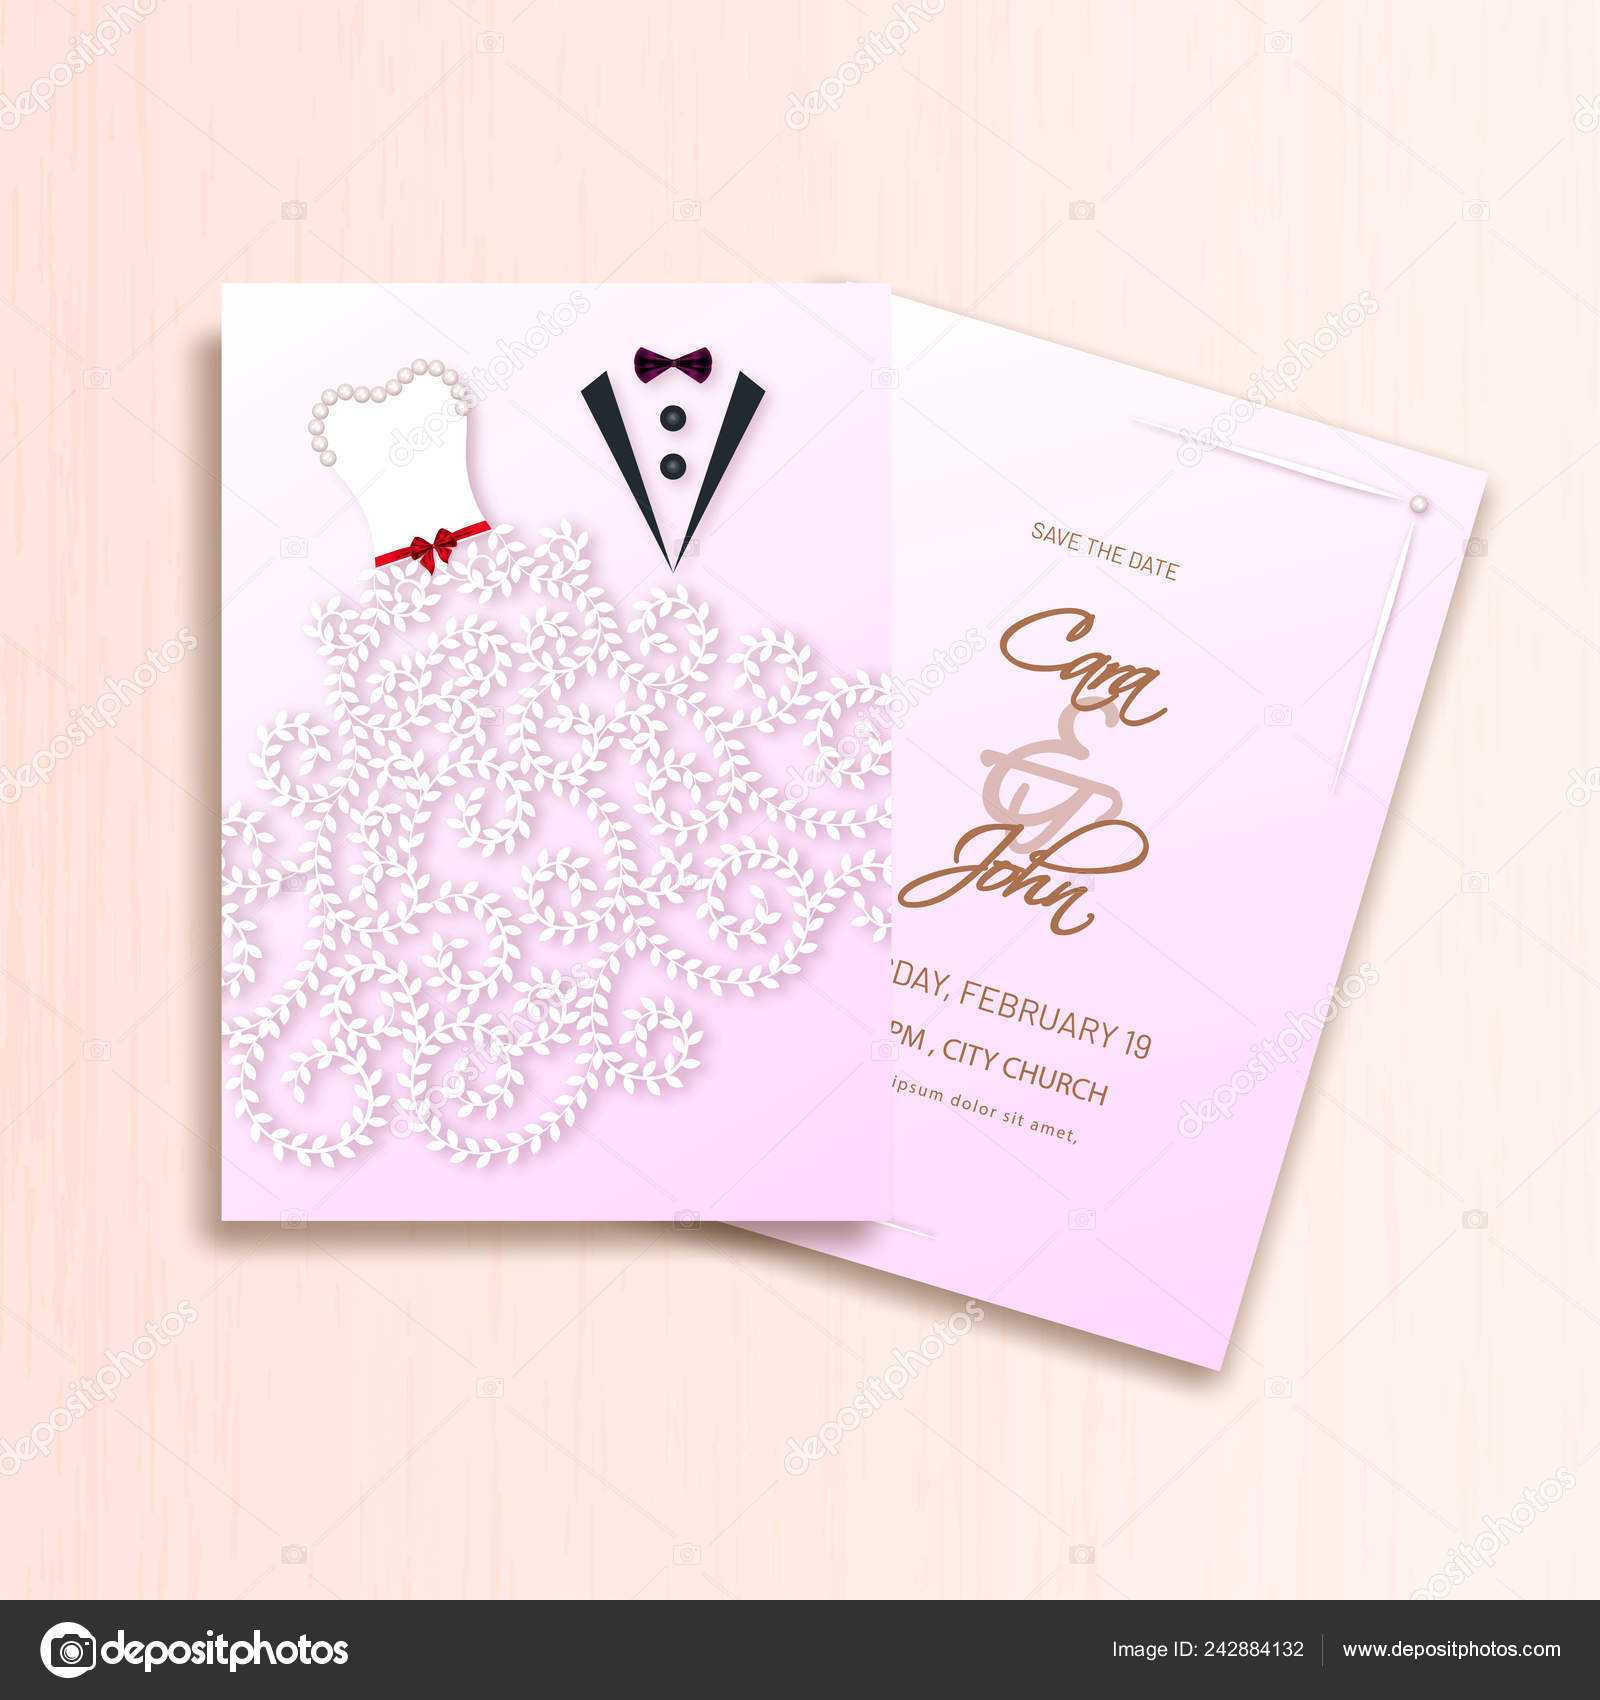 Creative Wedding Invitation Card Template Design Groom Bride Intended For Church Wedding Invitation Card Template